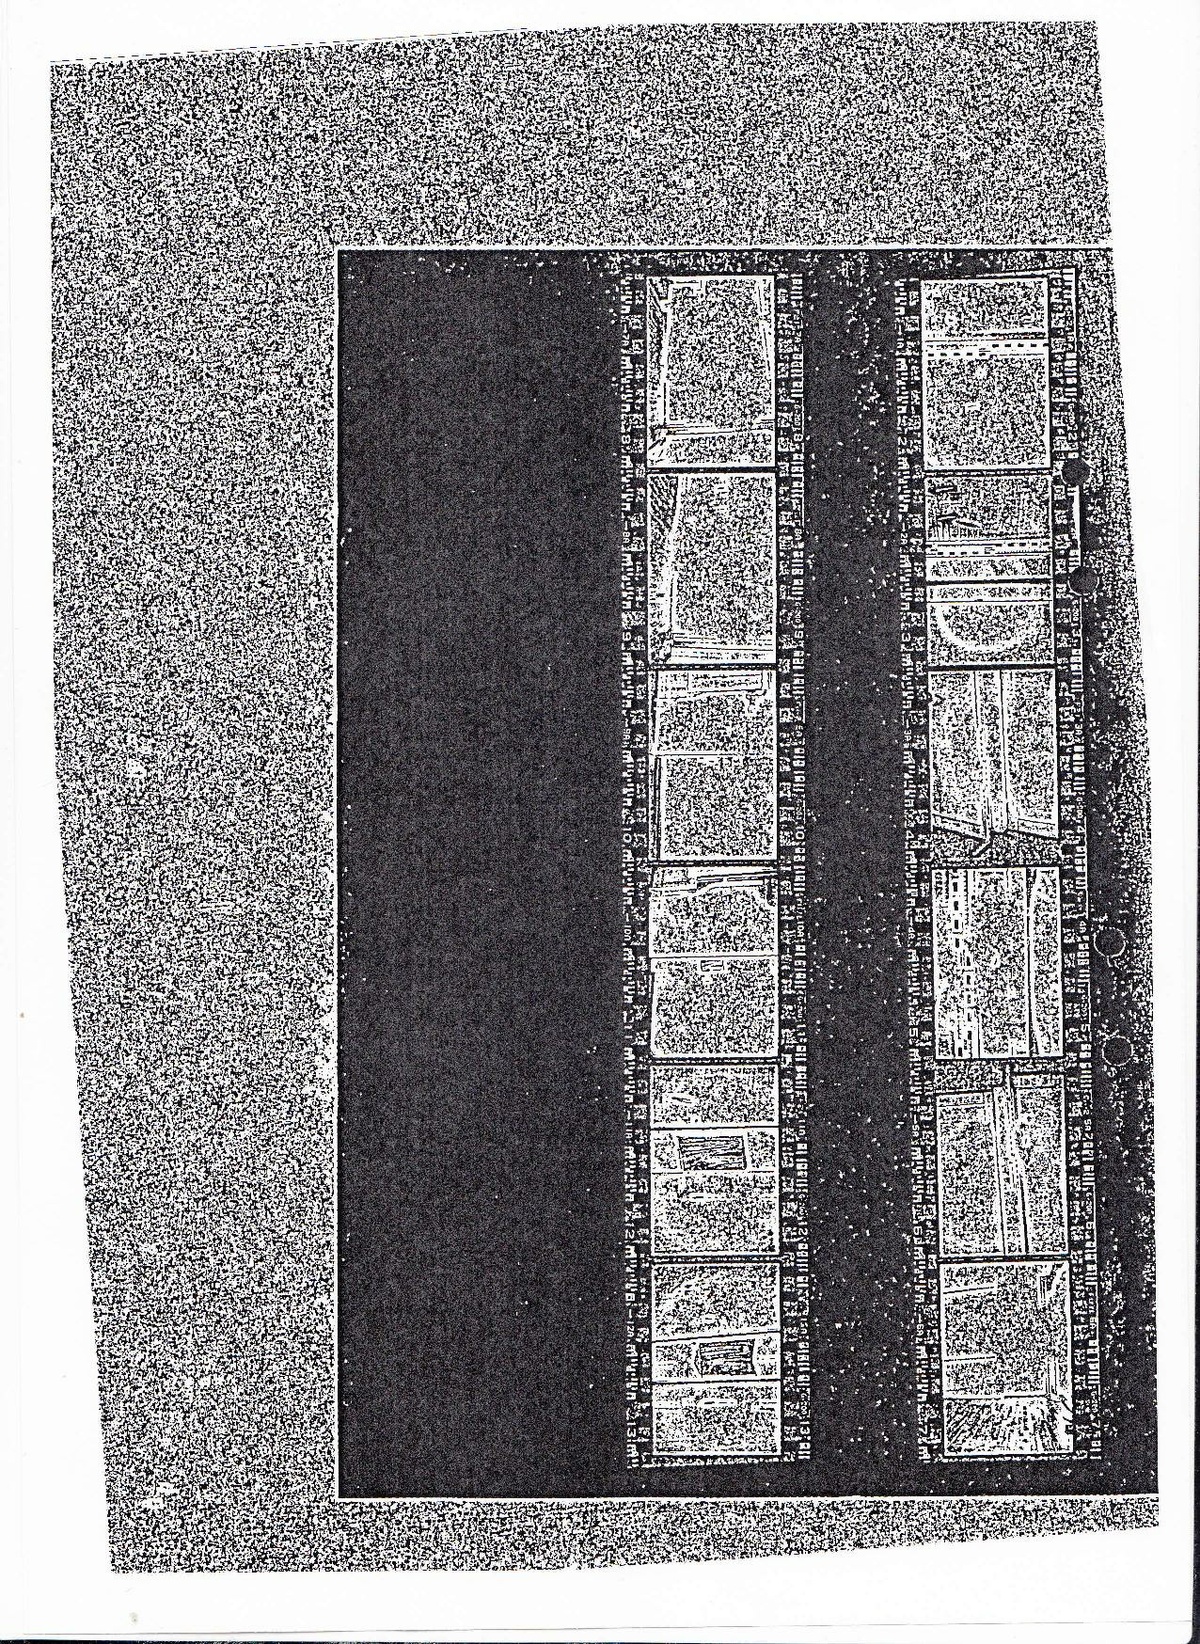 Pol-1995-02-13 IVA16674-02 Blyisotopmätning på kula i dörrkarm.pdf